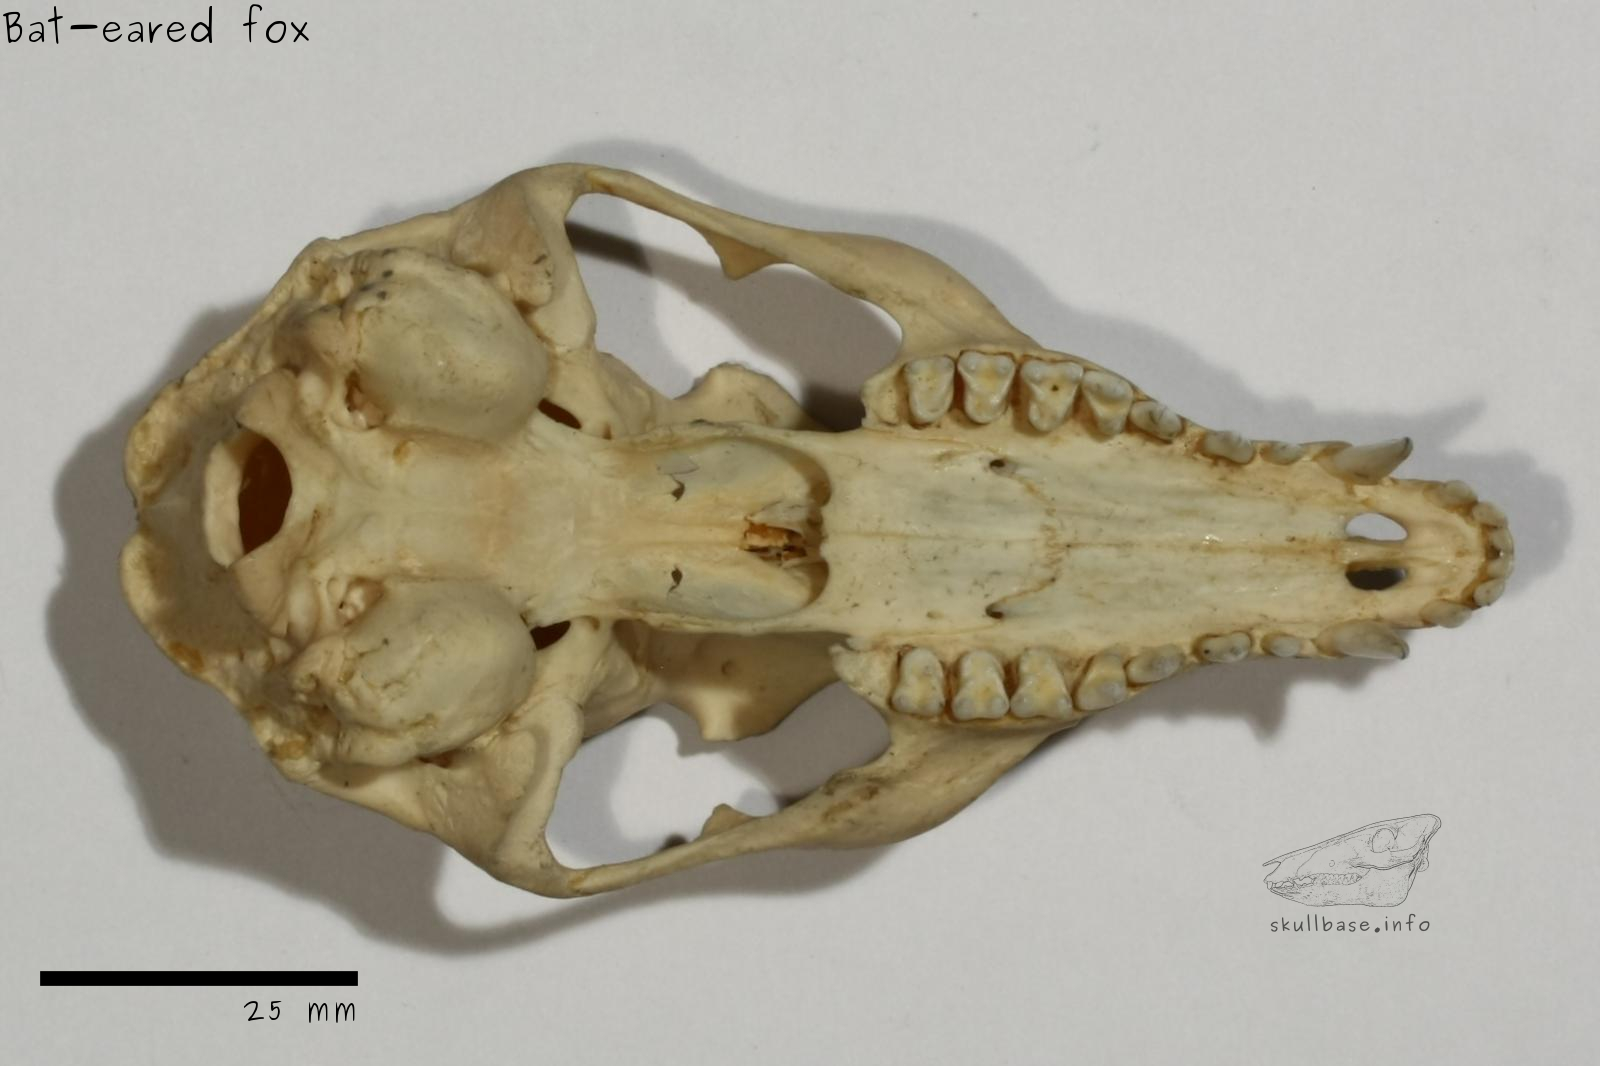 Bat-eared fox (Otocyon megalotis) skull ventral view